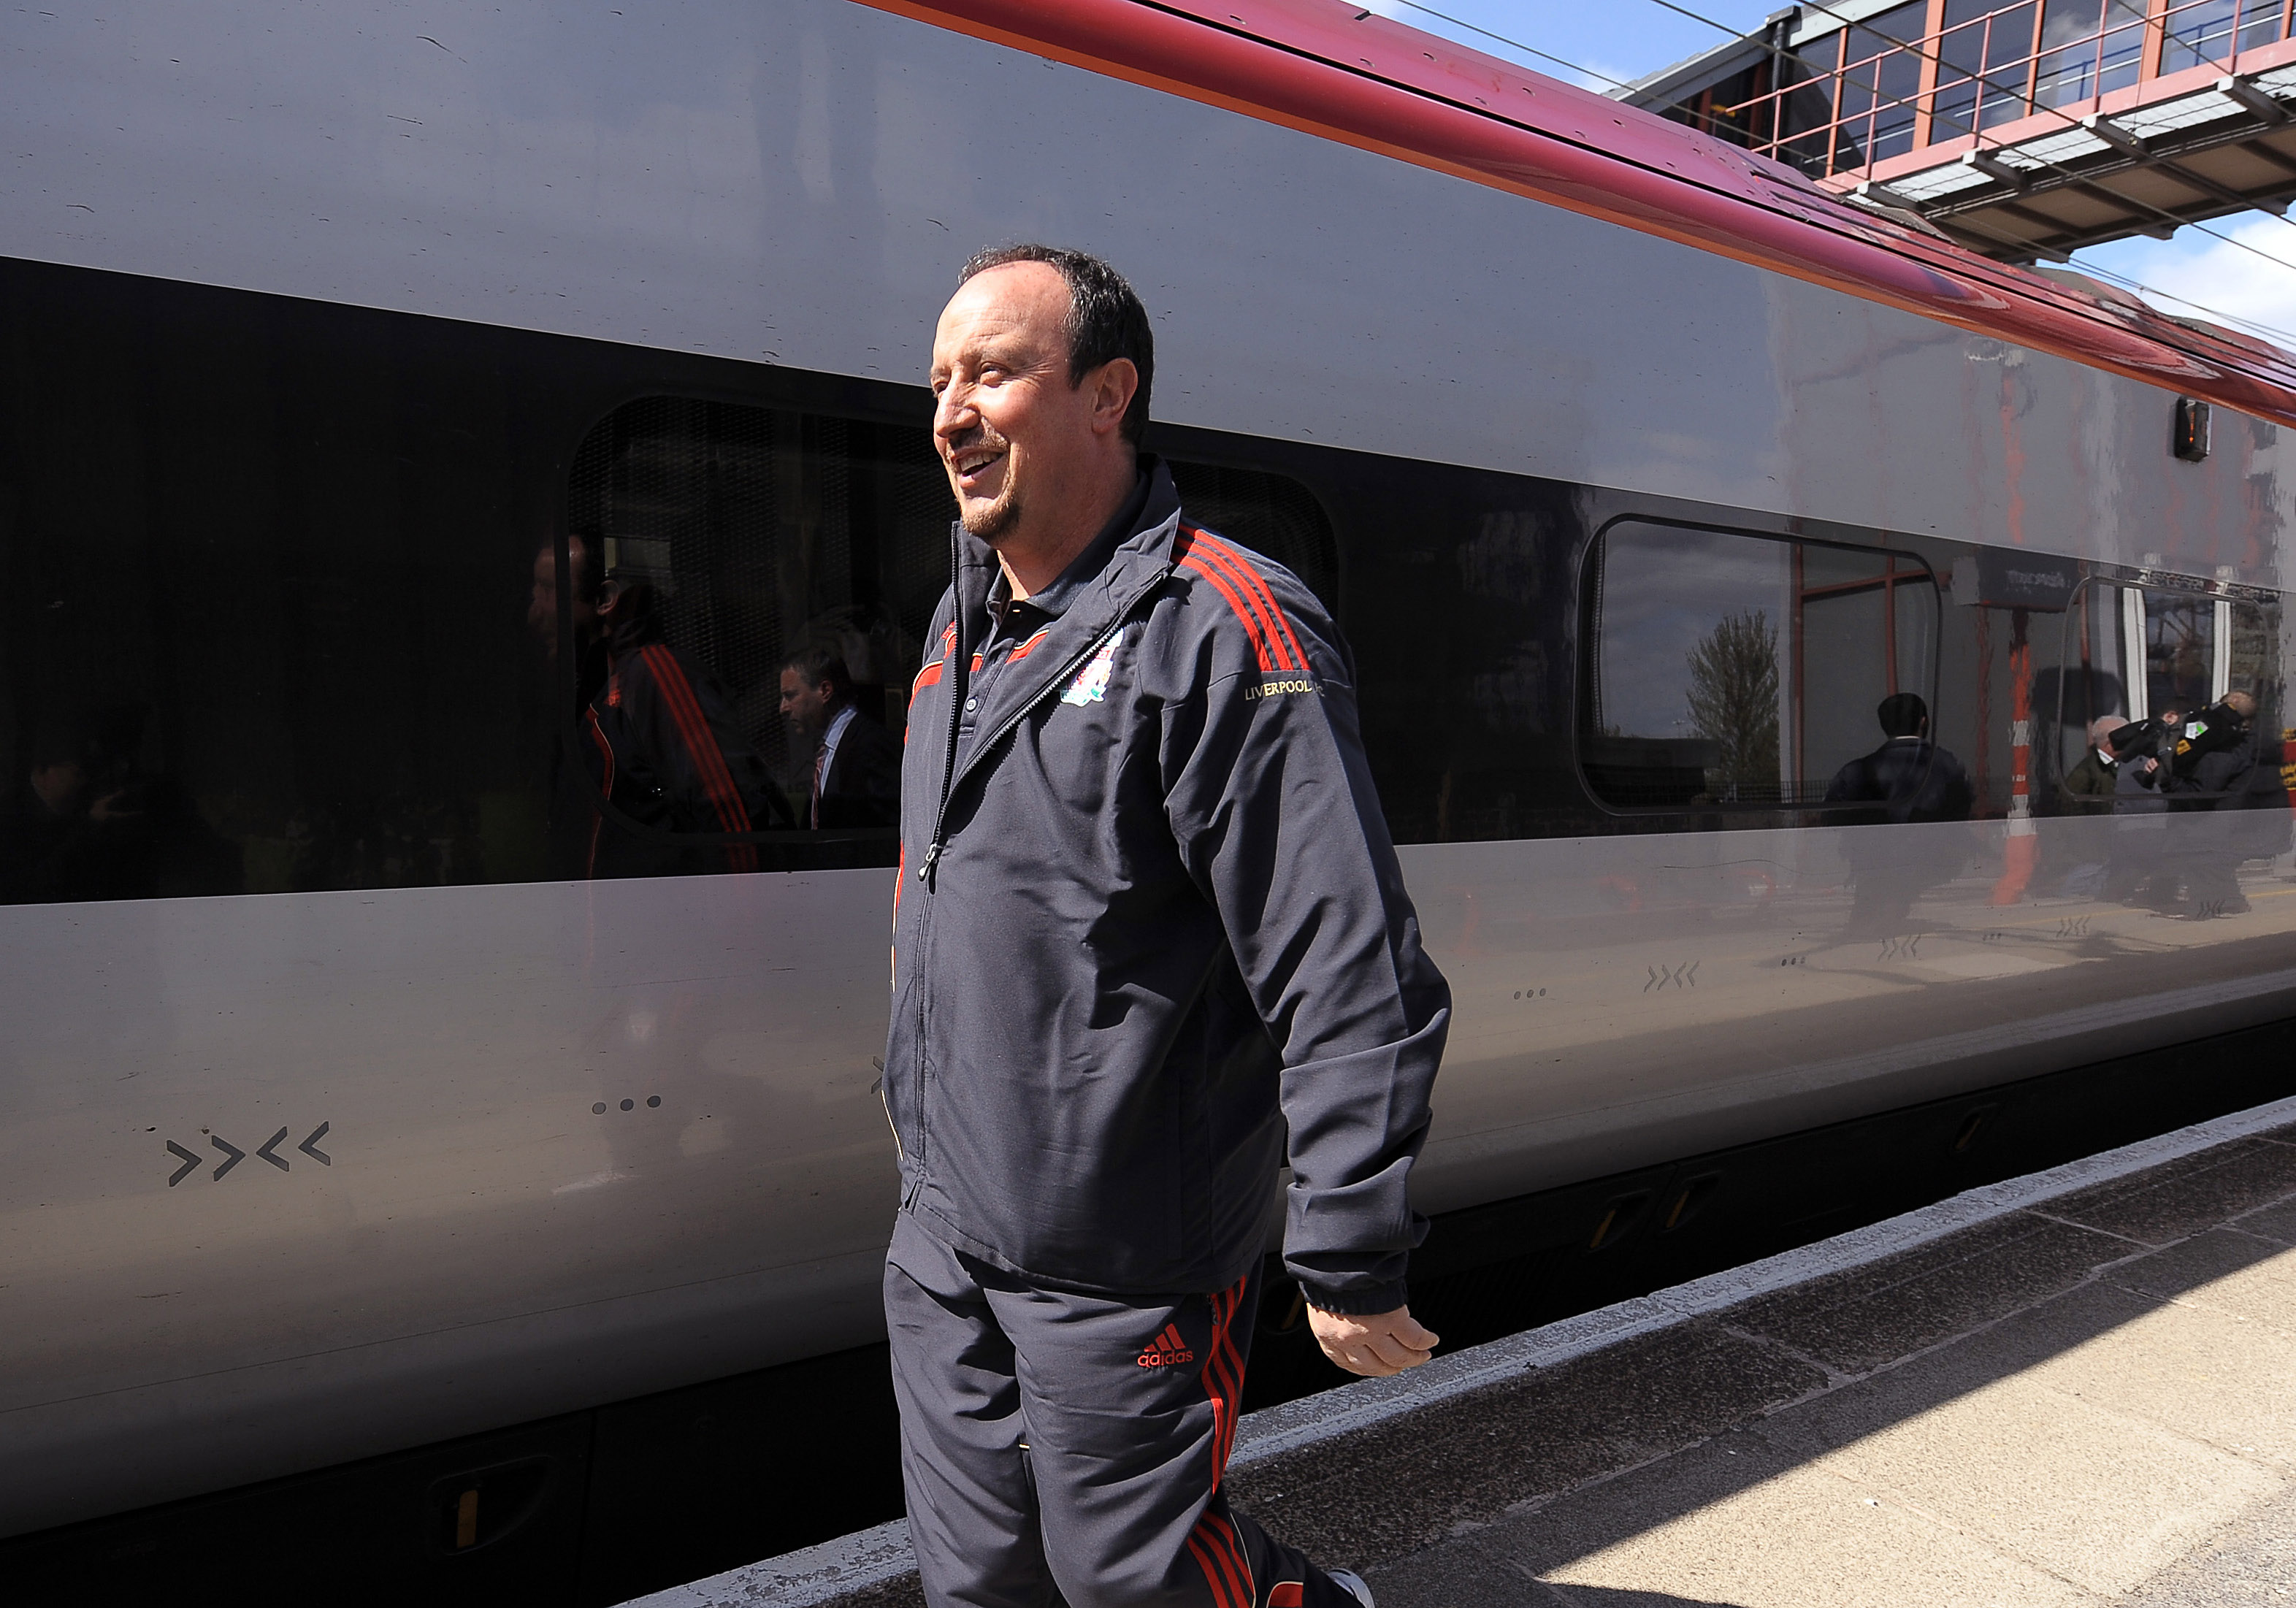 Liverpools manager, Rafael Benitez, utanför tåget.